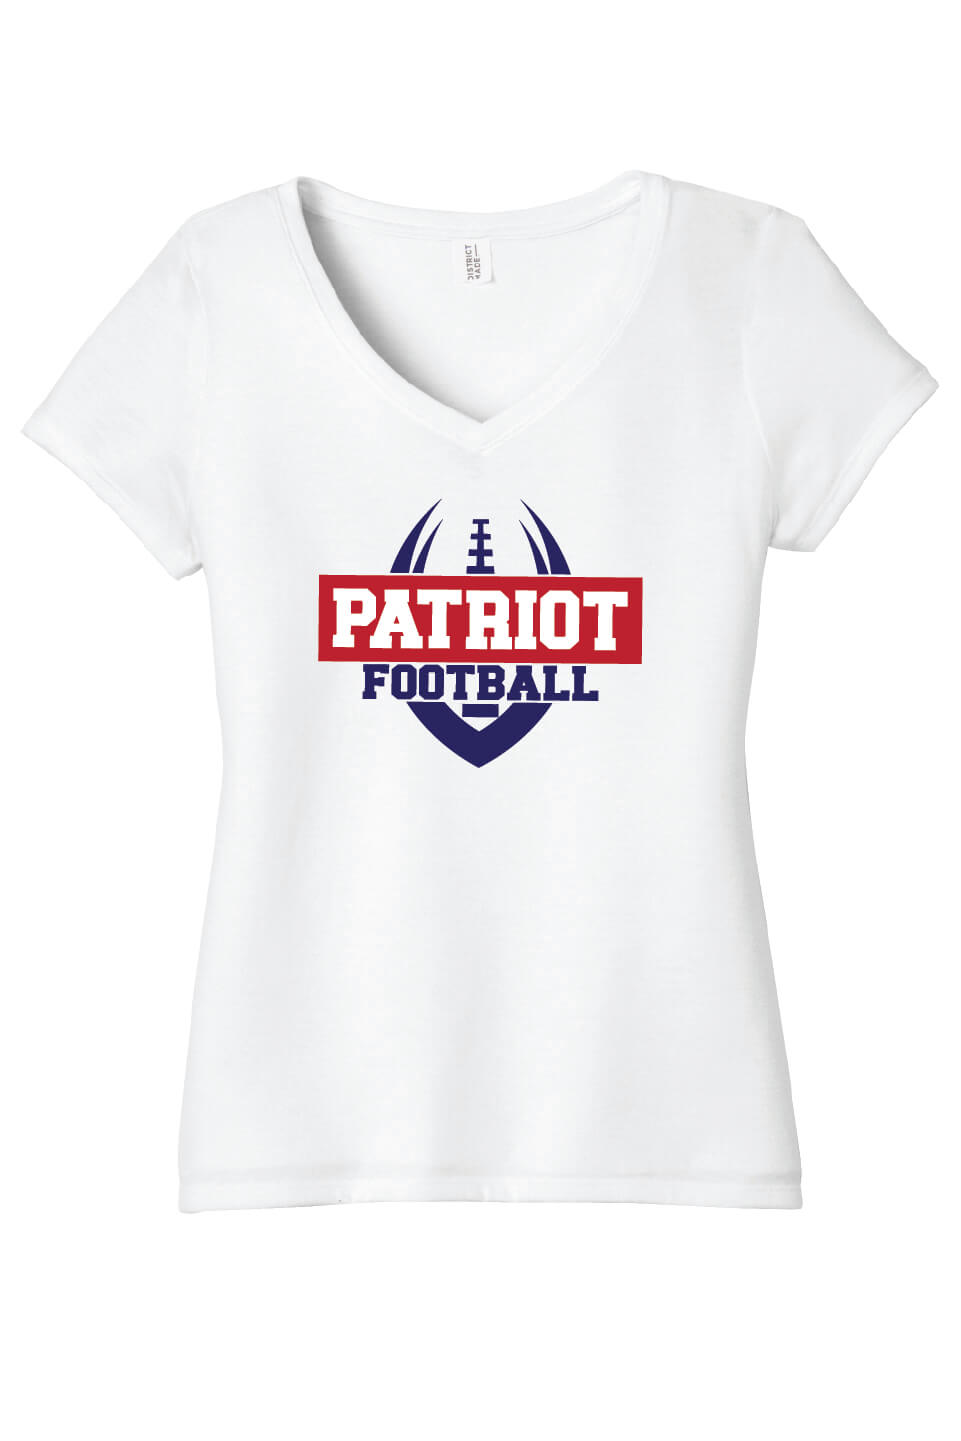 Patriot Football Ladies V-Neck Short Sleeve T-Shirt white